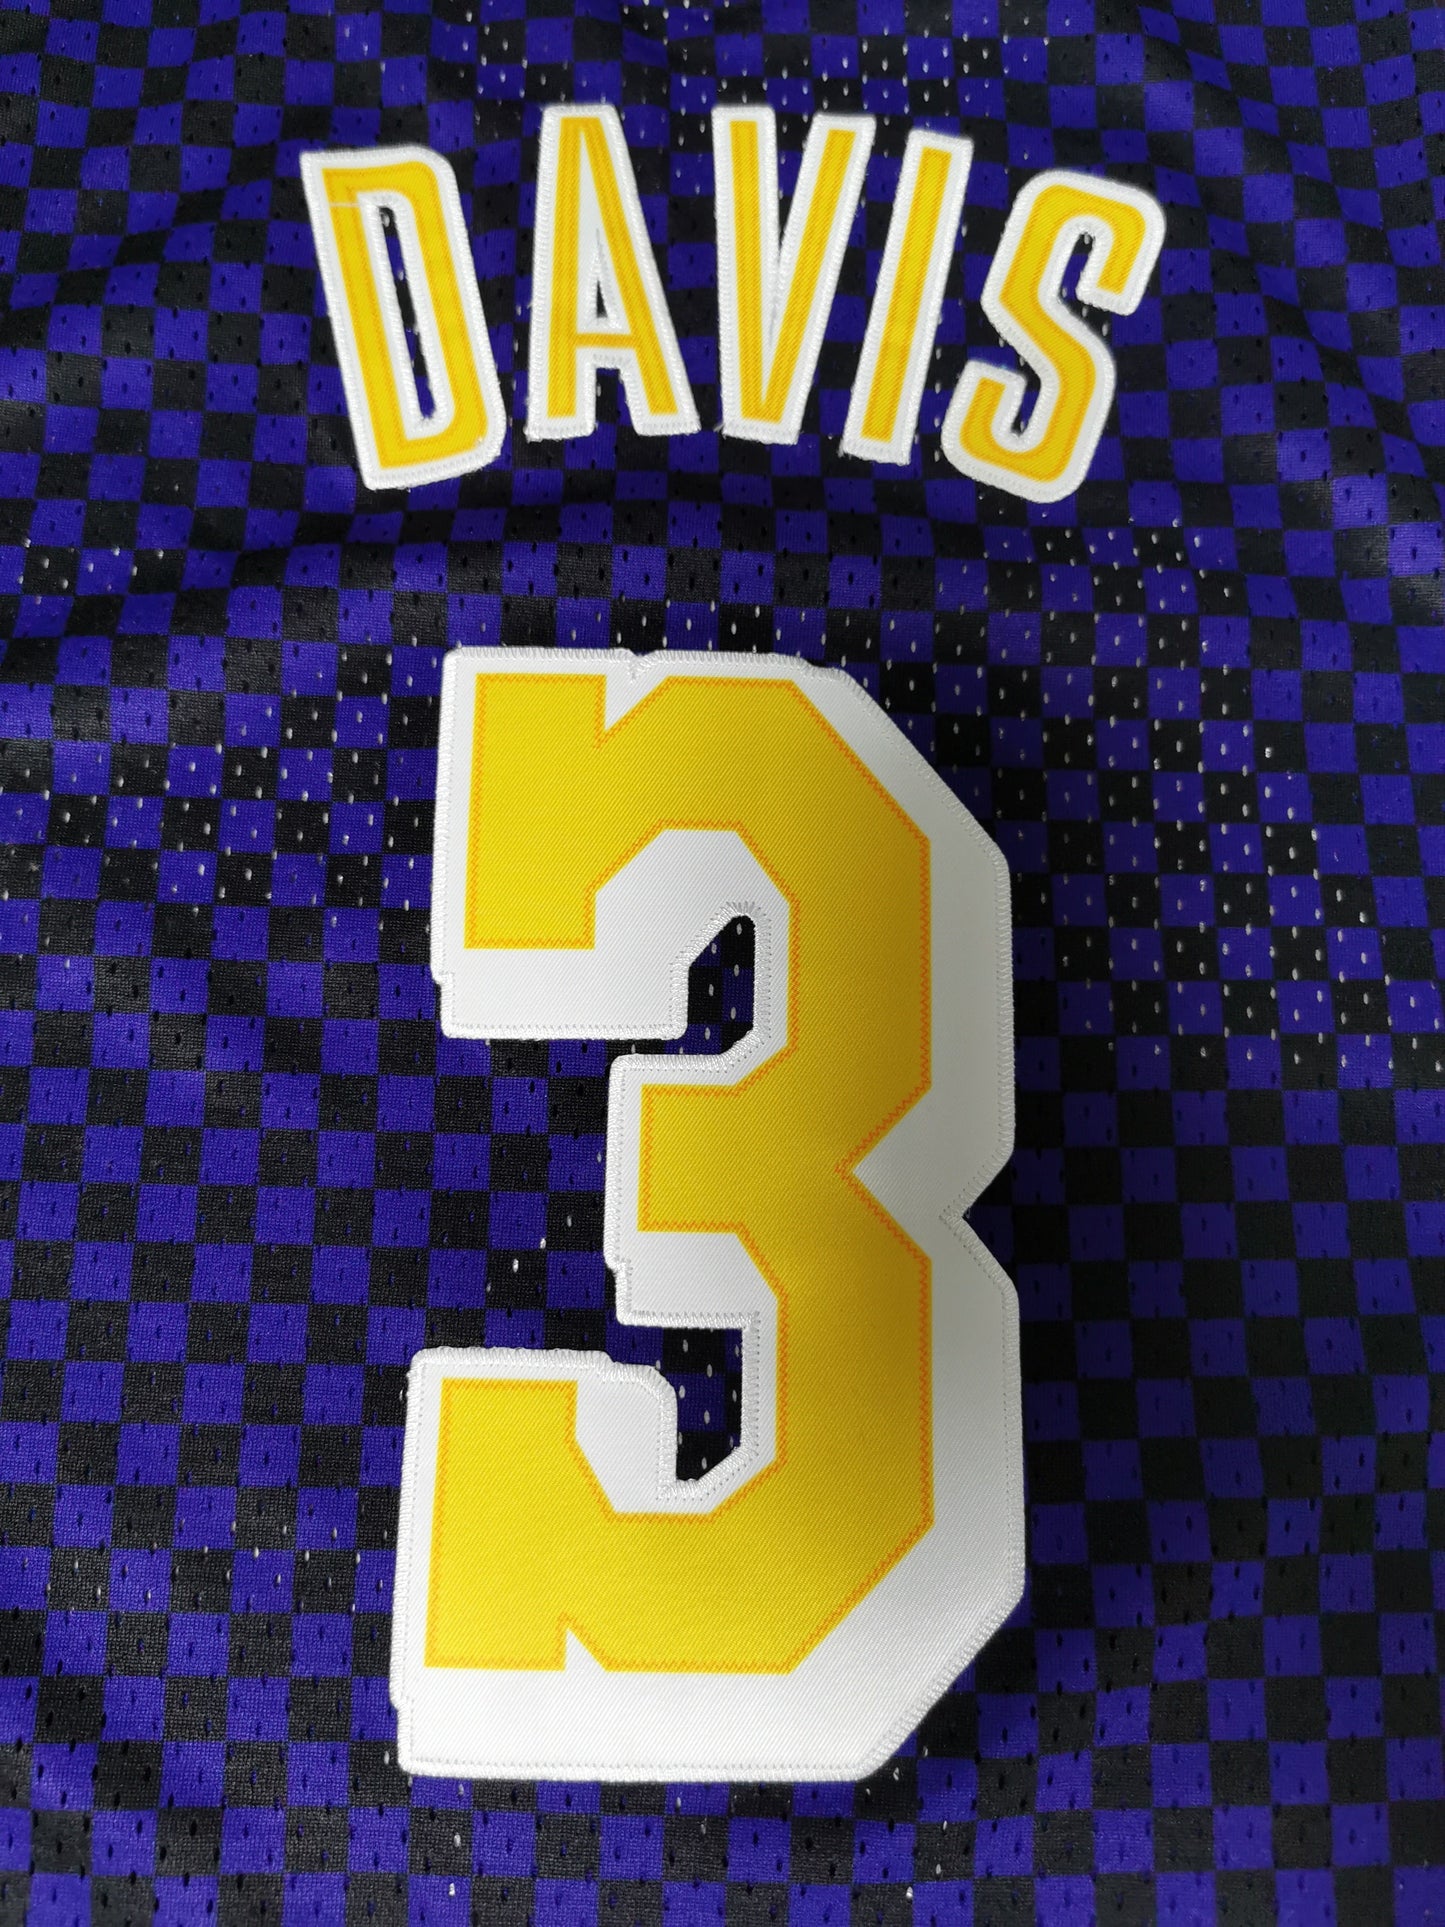 Los Angeles Lakers Anthony Davis Retro Lila #3 NBA Swingman-Trikot für Herren